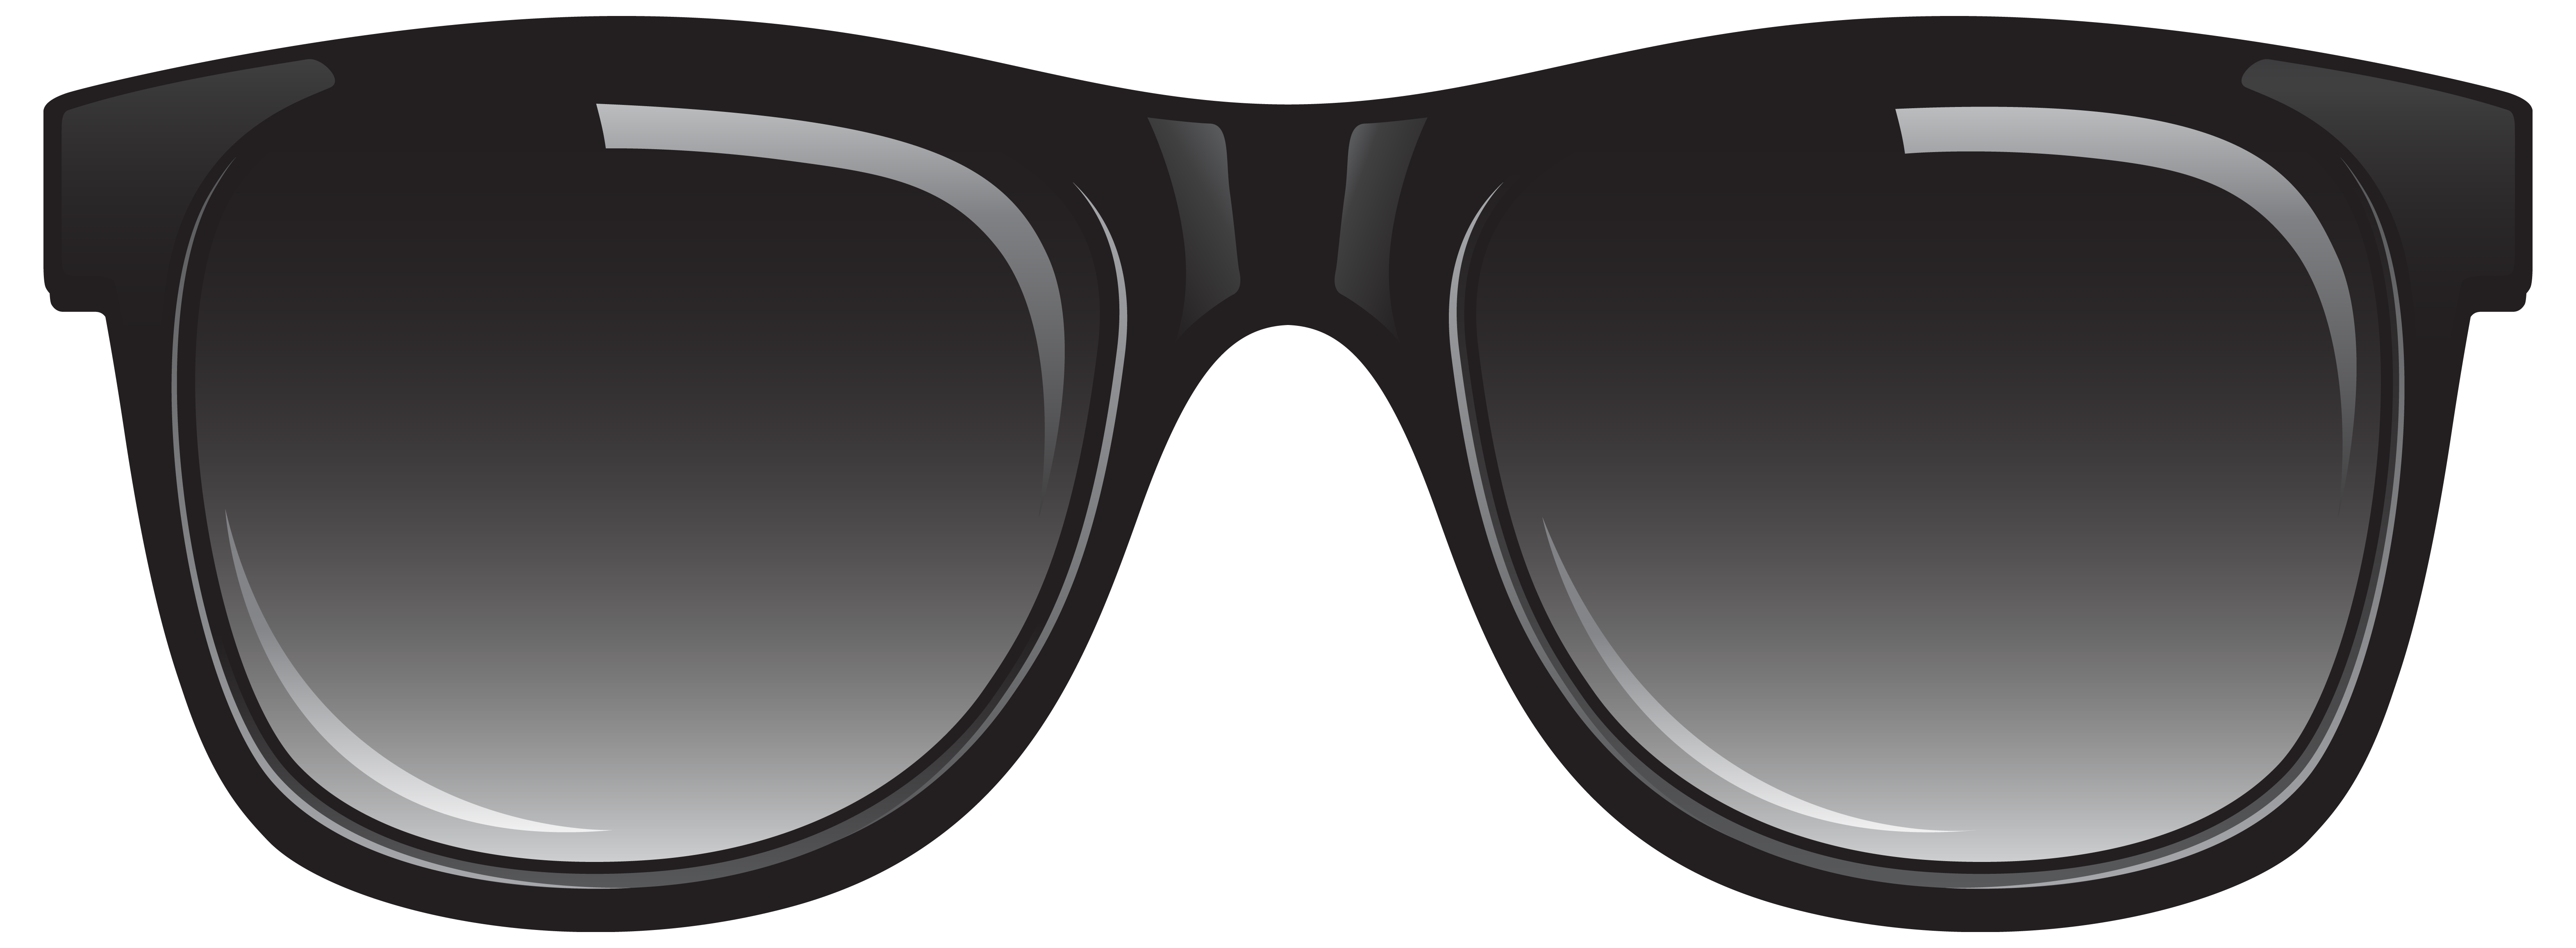 Sunglasses Ray-Ban Black Carrera Wayfarer Aviator PNG Image